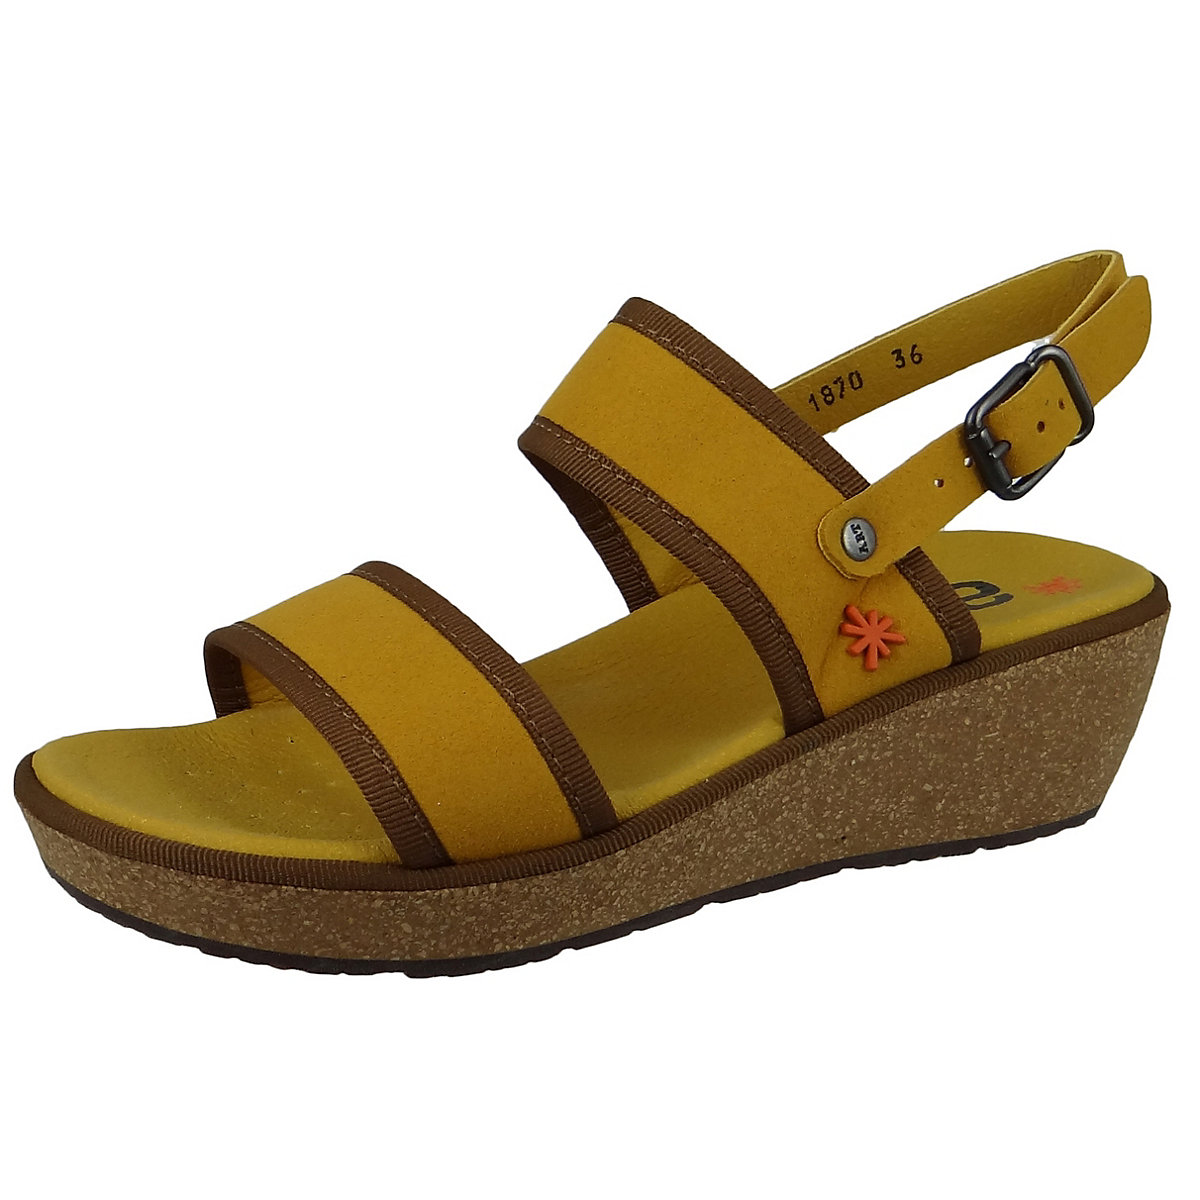 *art Damen Komfort Sandalen Capri 1870 Gelb Mostaza Textil Klassische Sandalen gelb